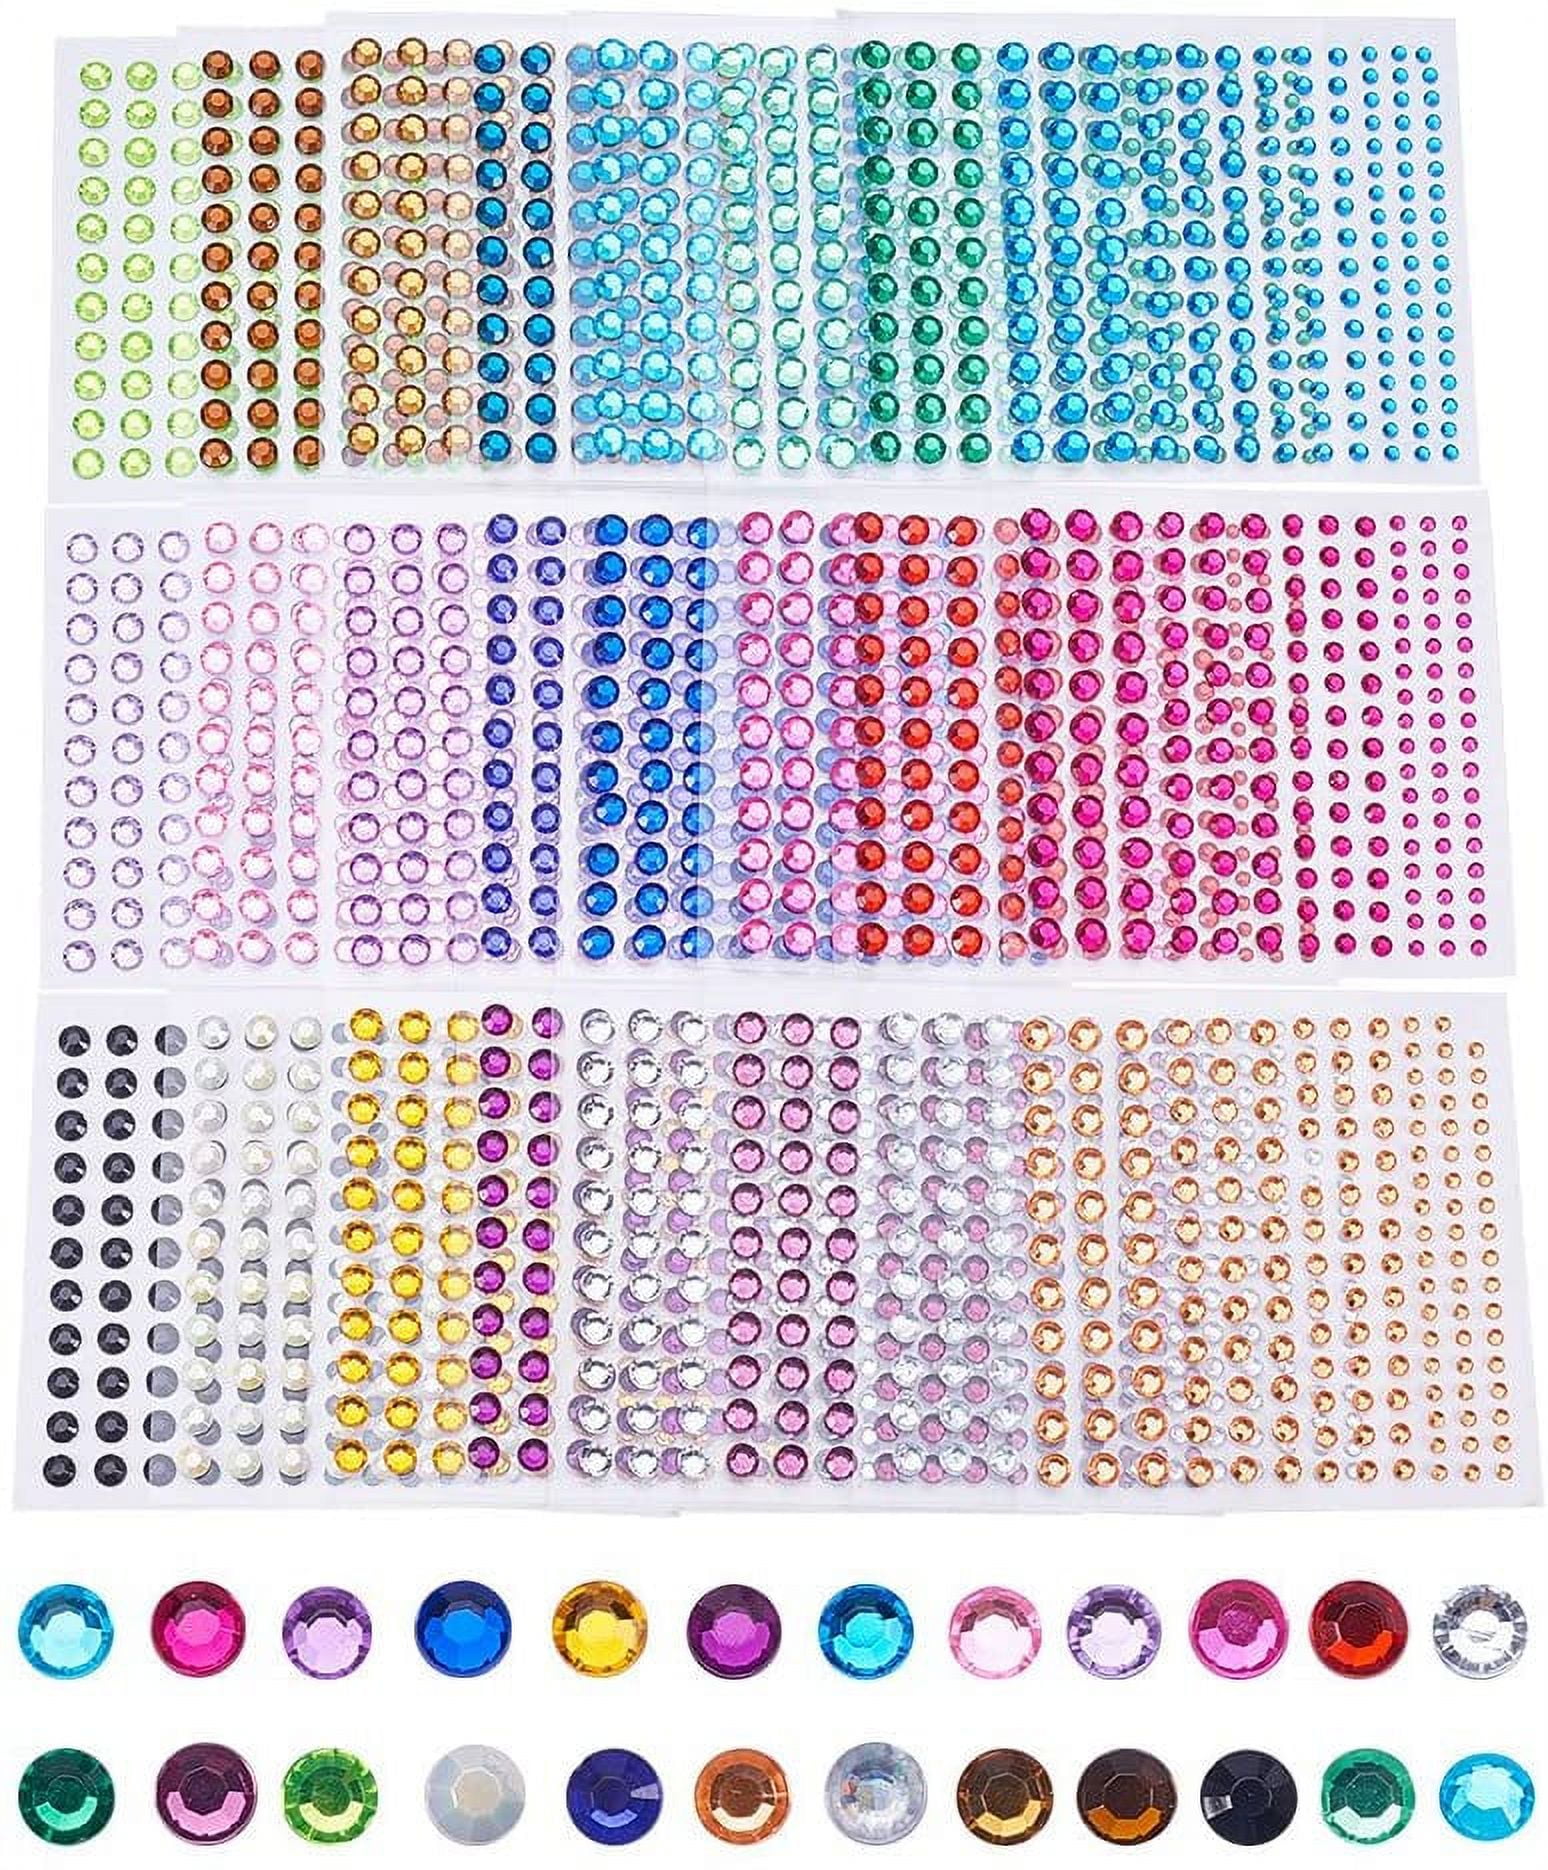 3168 Pcs Self-Adhesive Rhinestone Sticker 24 Sheets DIY Jewel Crystal Gem  Rhinestone Embellishment Stickers 4 Sizes 3-6mm for Makeup Nail Art Mobile